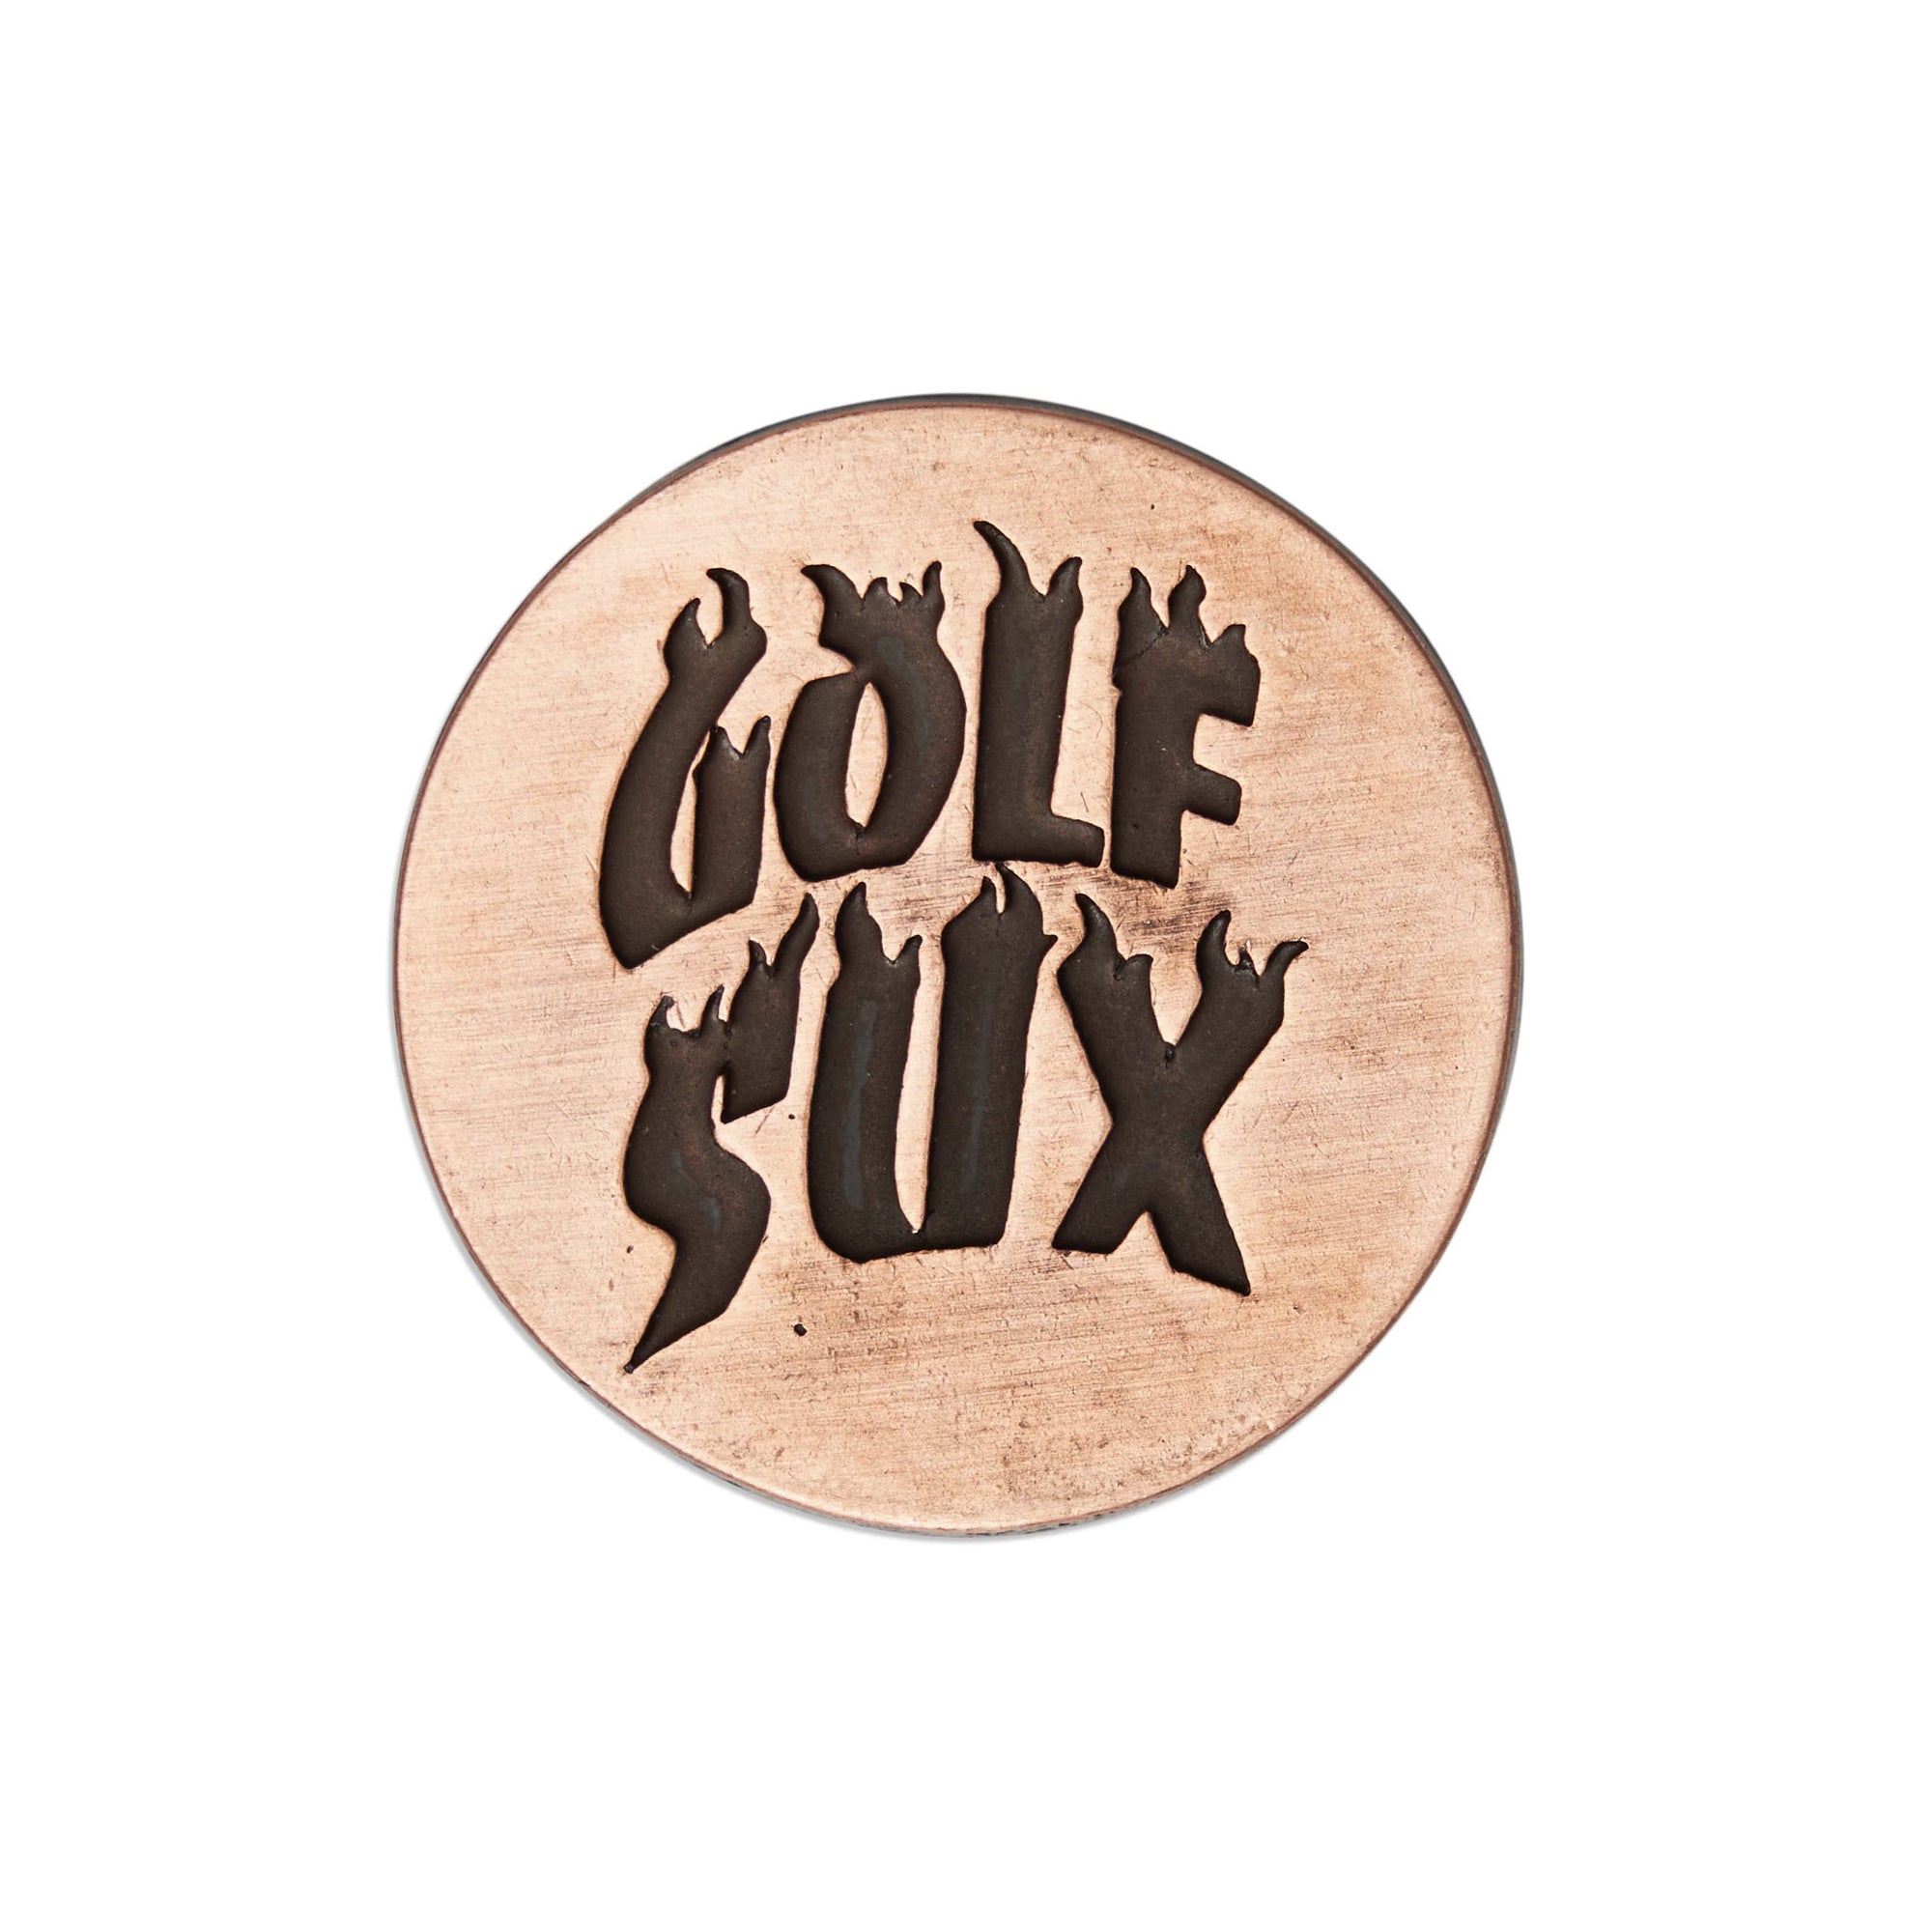 Golf Sux Ball Mark